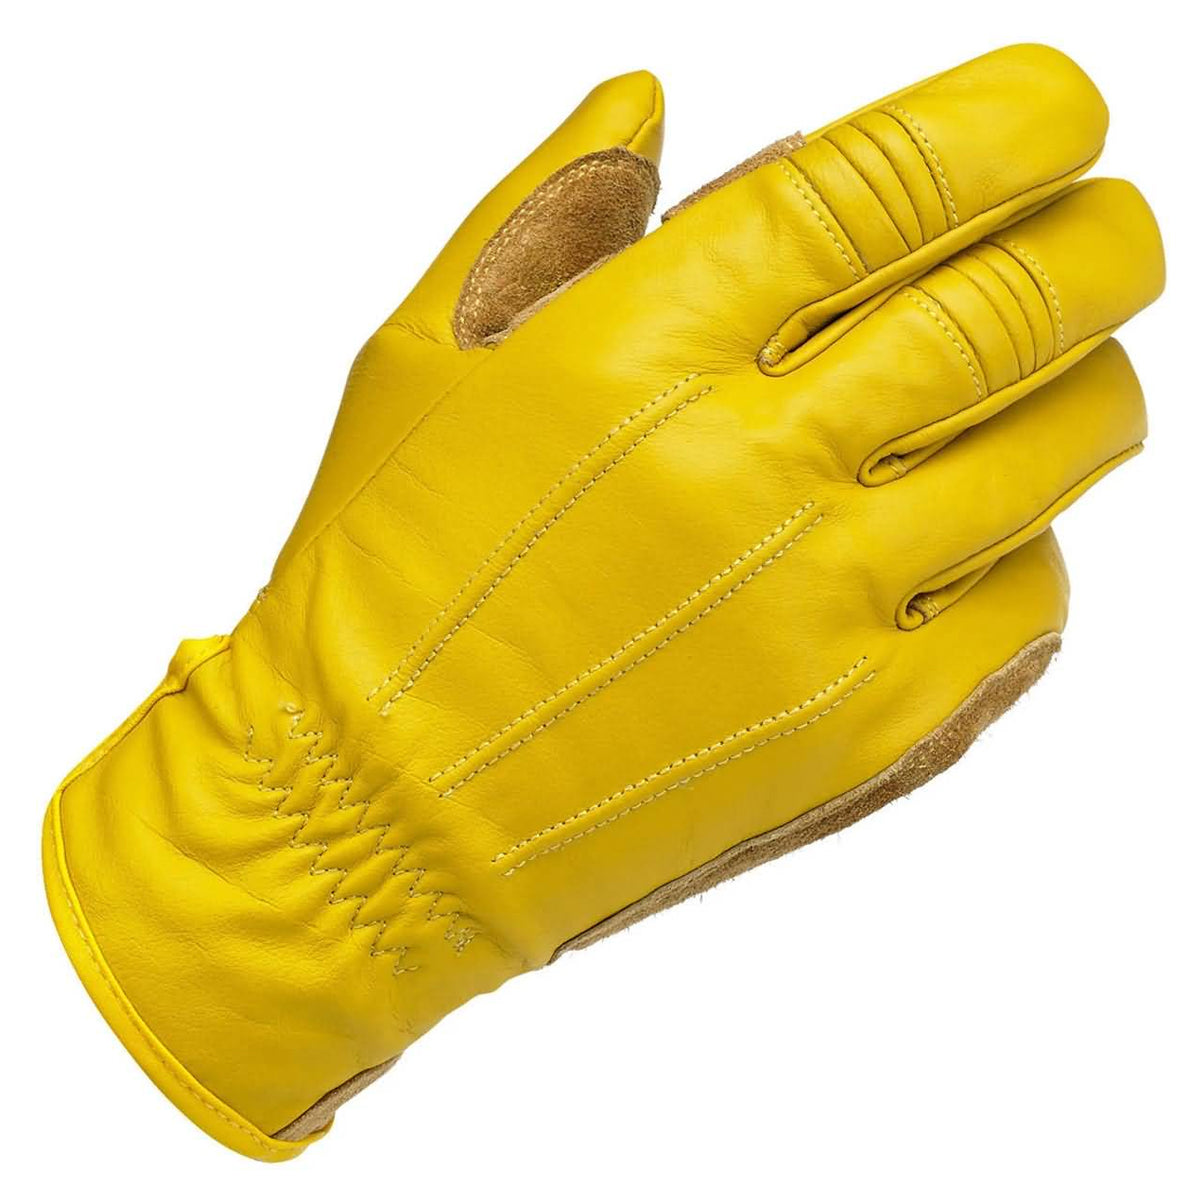 Biltwell Work Men's Cruiser Gloves 